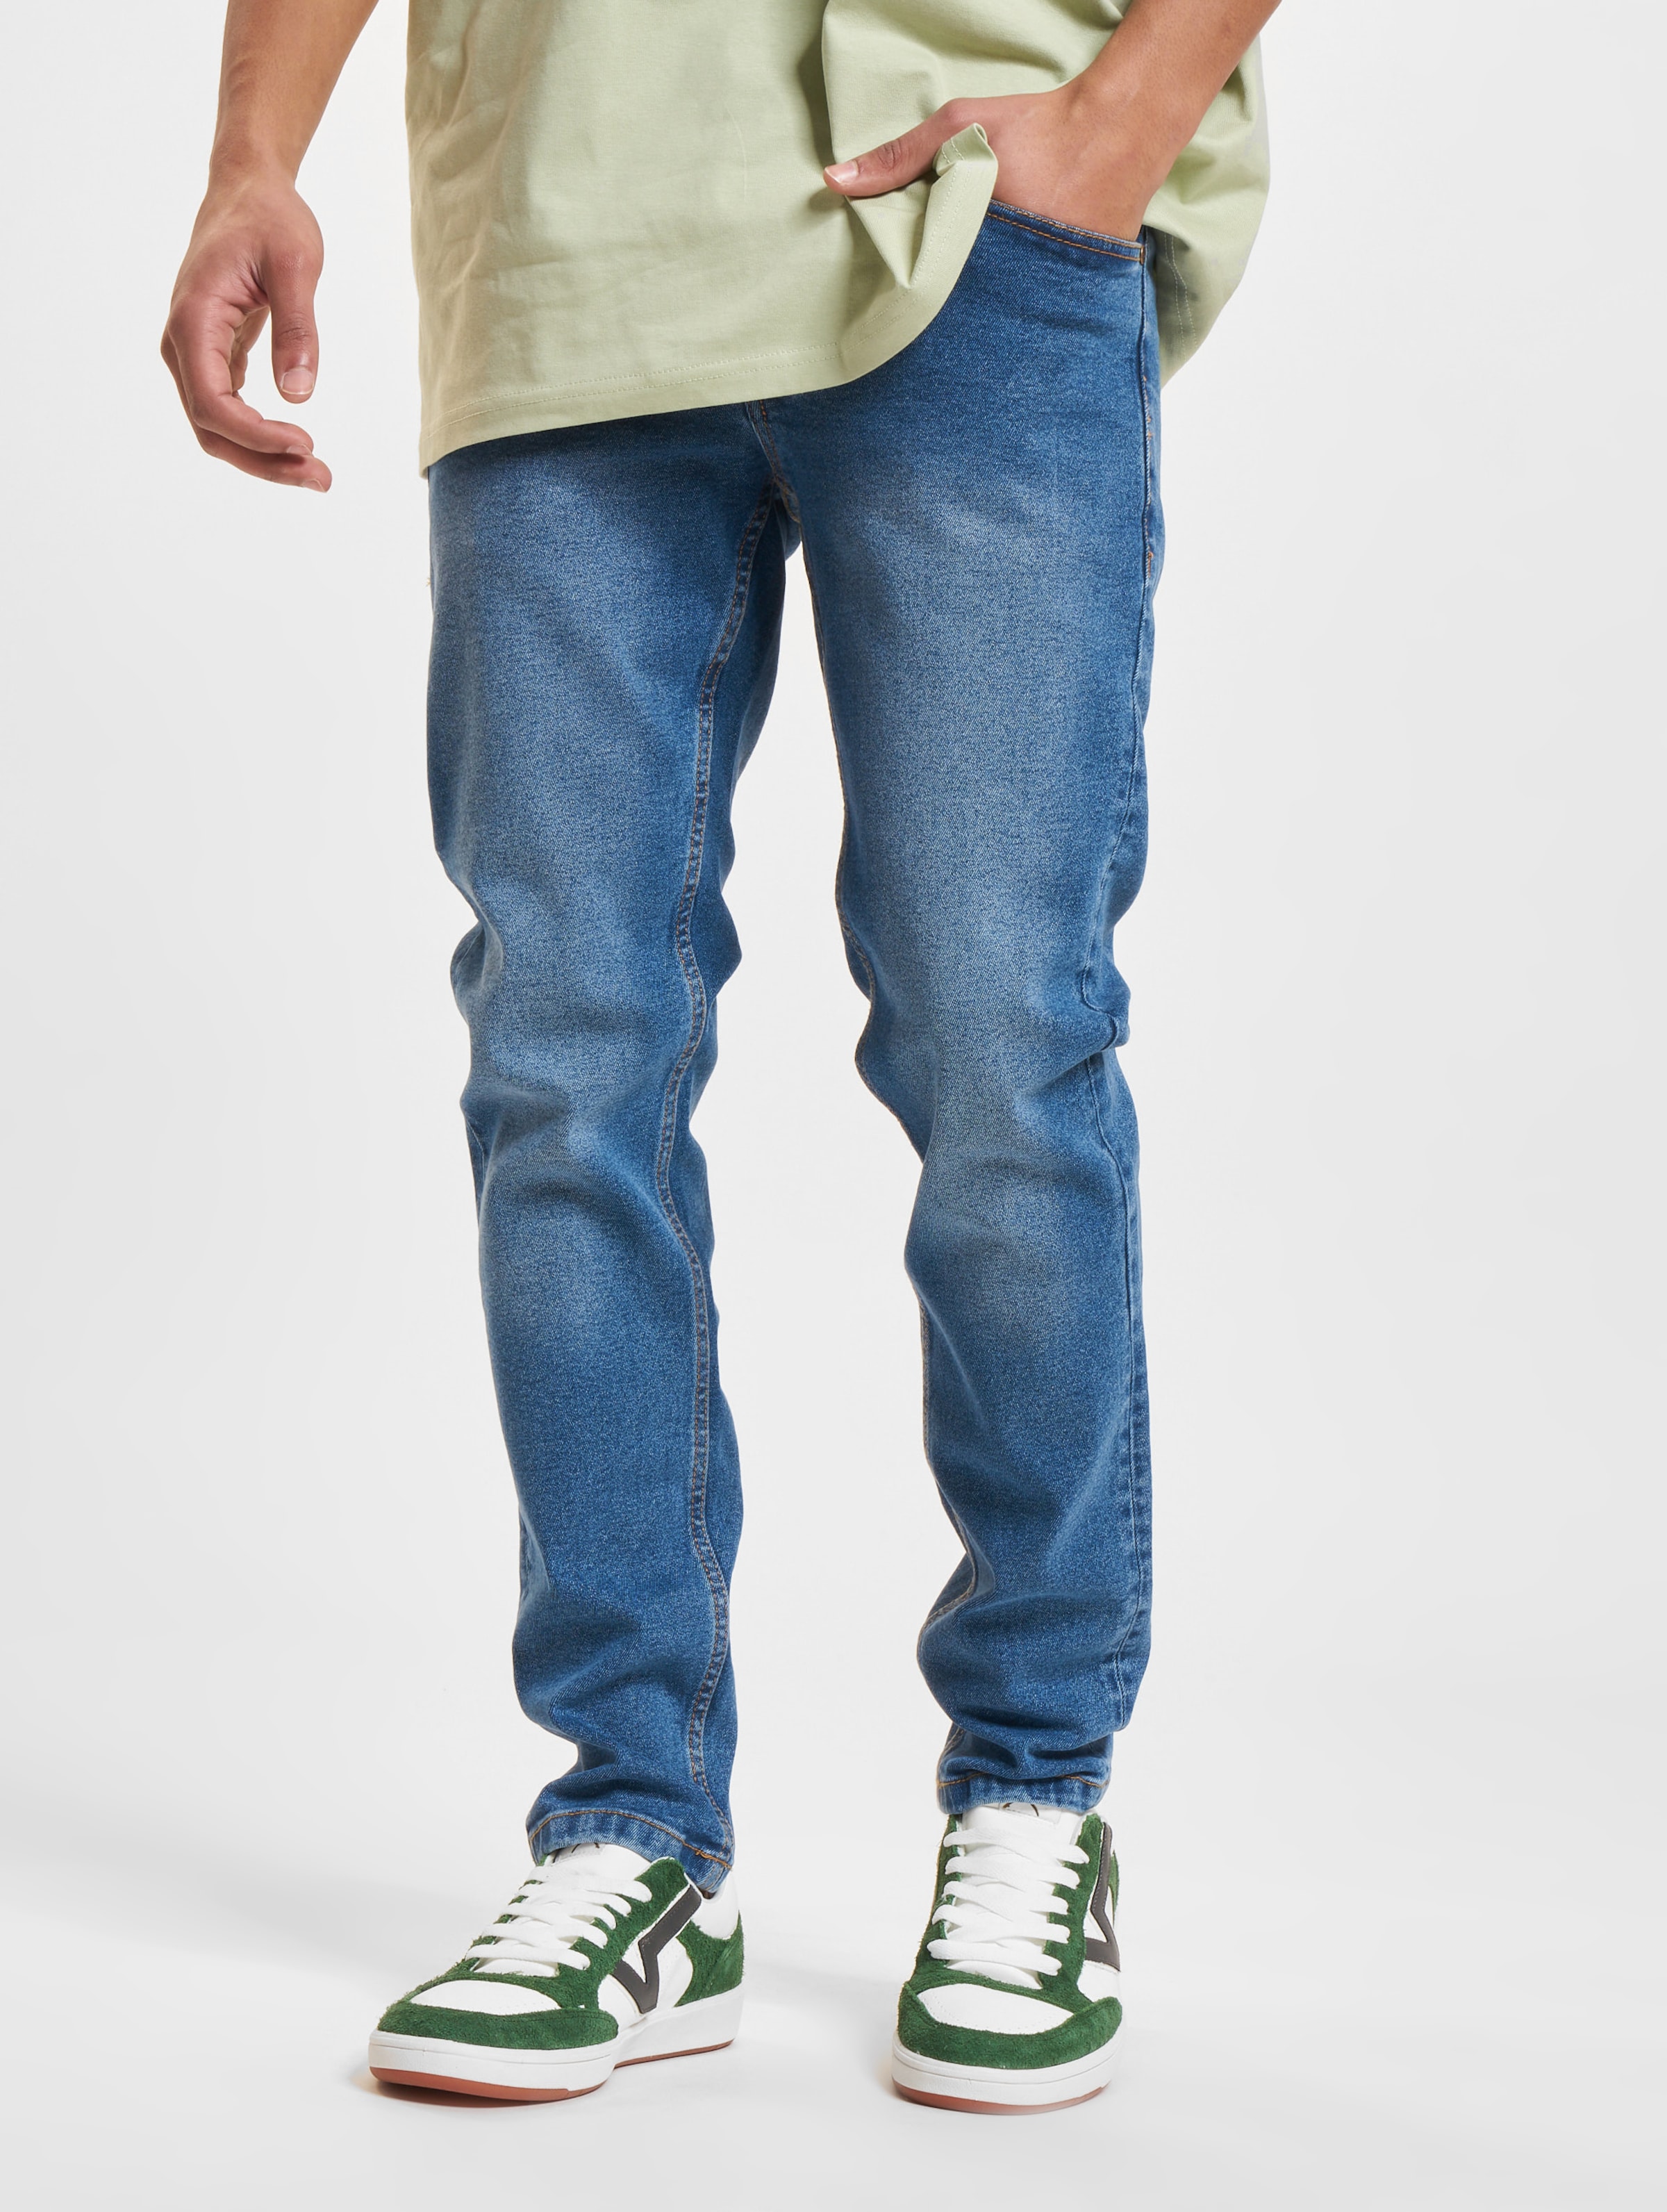 Denim Project Mr. Red Skinny Fit Jeans Mannen op kleur blauw, Maat 3330